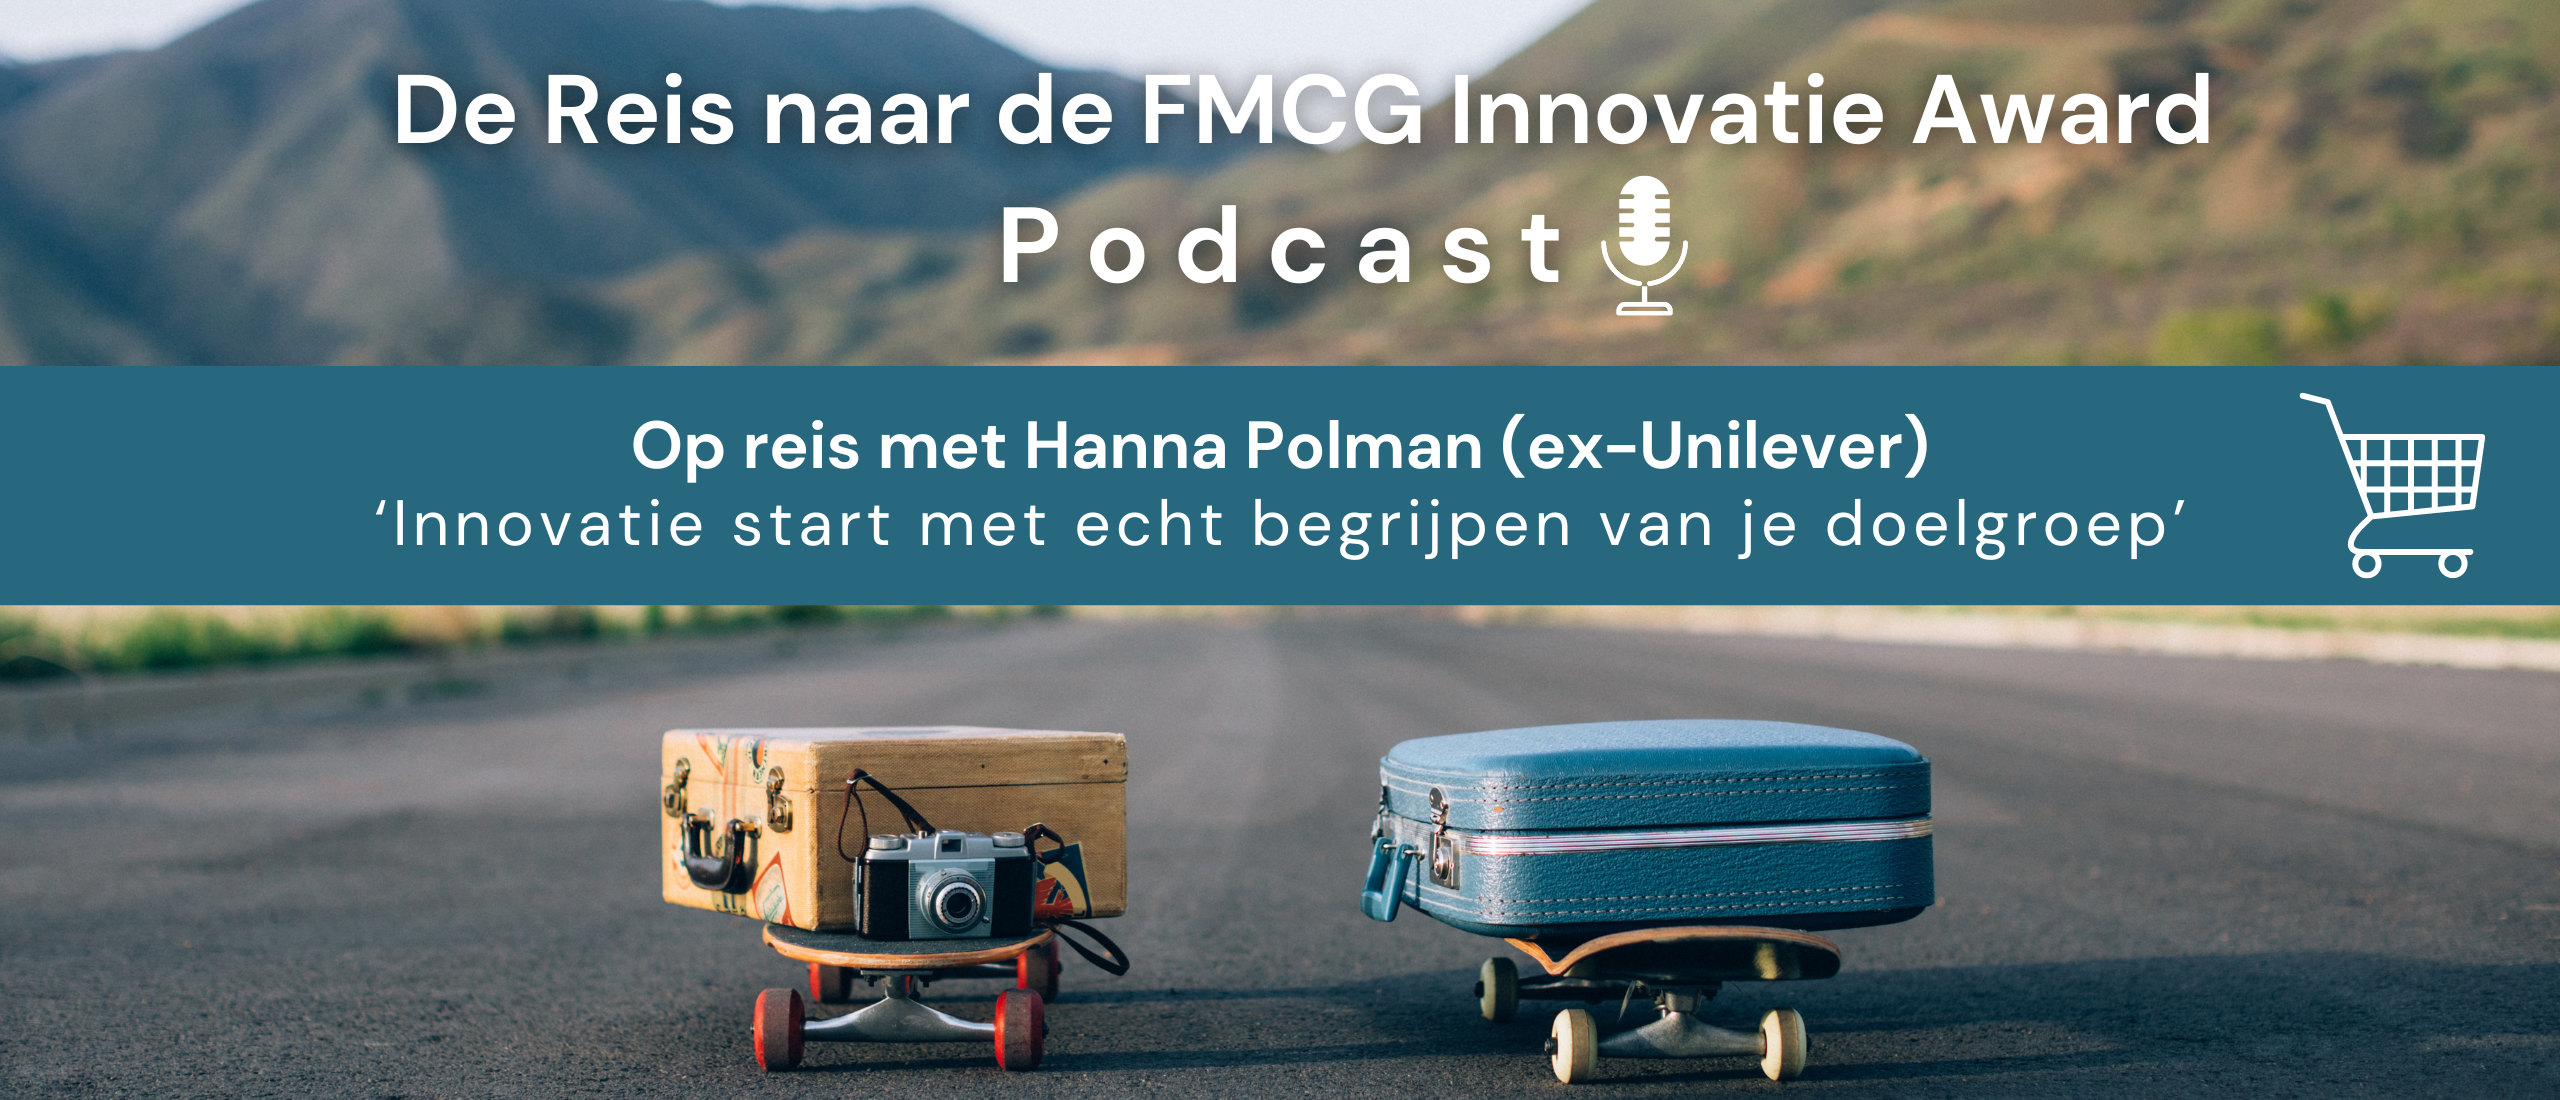 Podcast: Hanna Polman over succesvol innoveren in FMCG